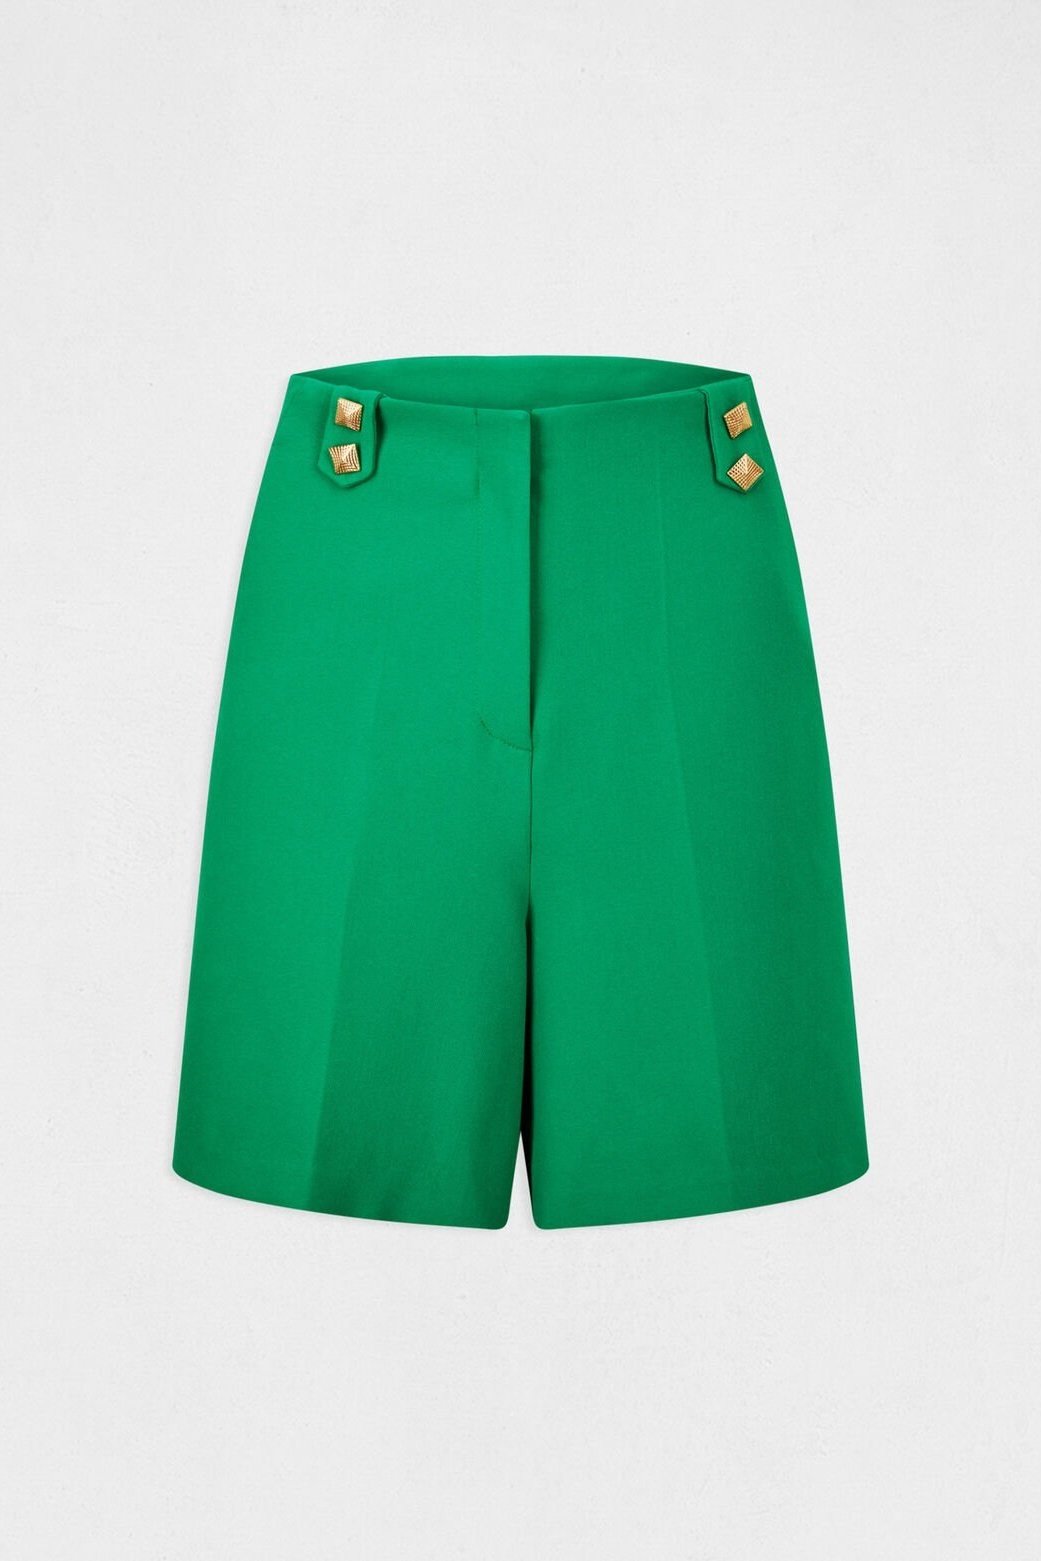 MORGAN - מכנסי ברמודה אלגנטיות לנשים בצבע ירוק - MASHBIR//365